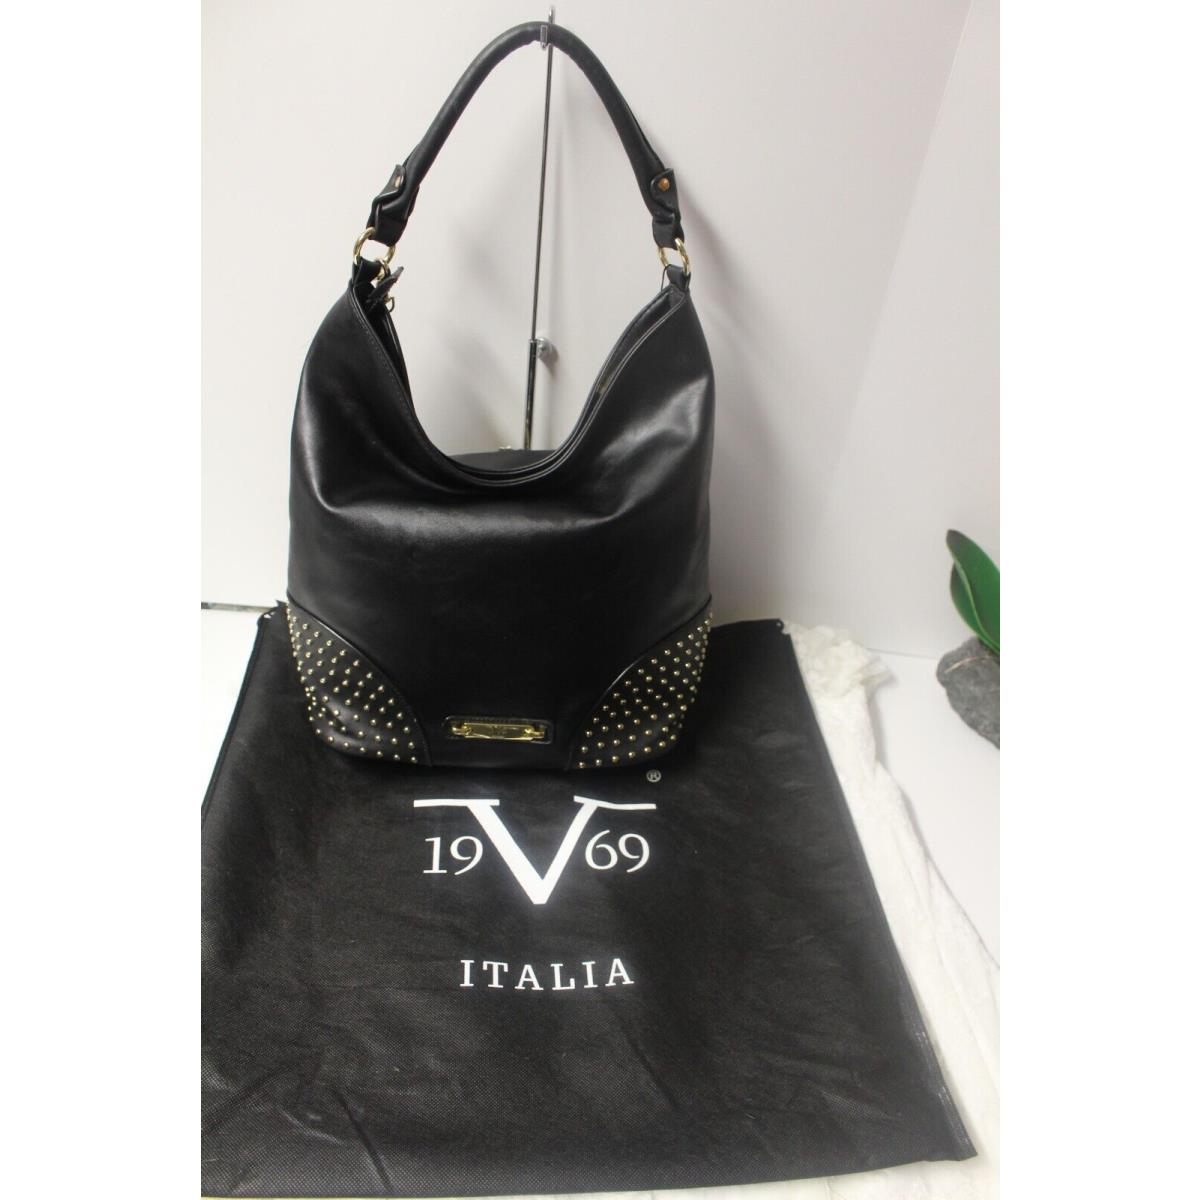 VERSACE 19.69 Abbigliamento Sportivo SRL Milano Italia Patent Tote Black  Handbag - Women's handbags